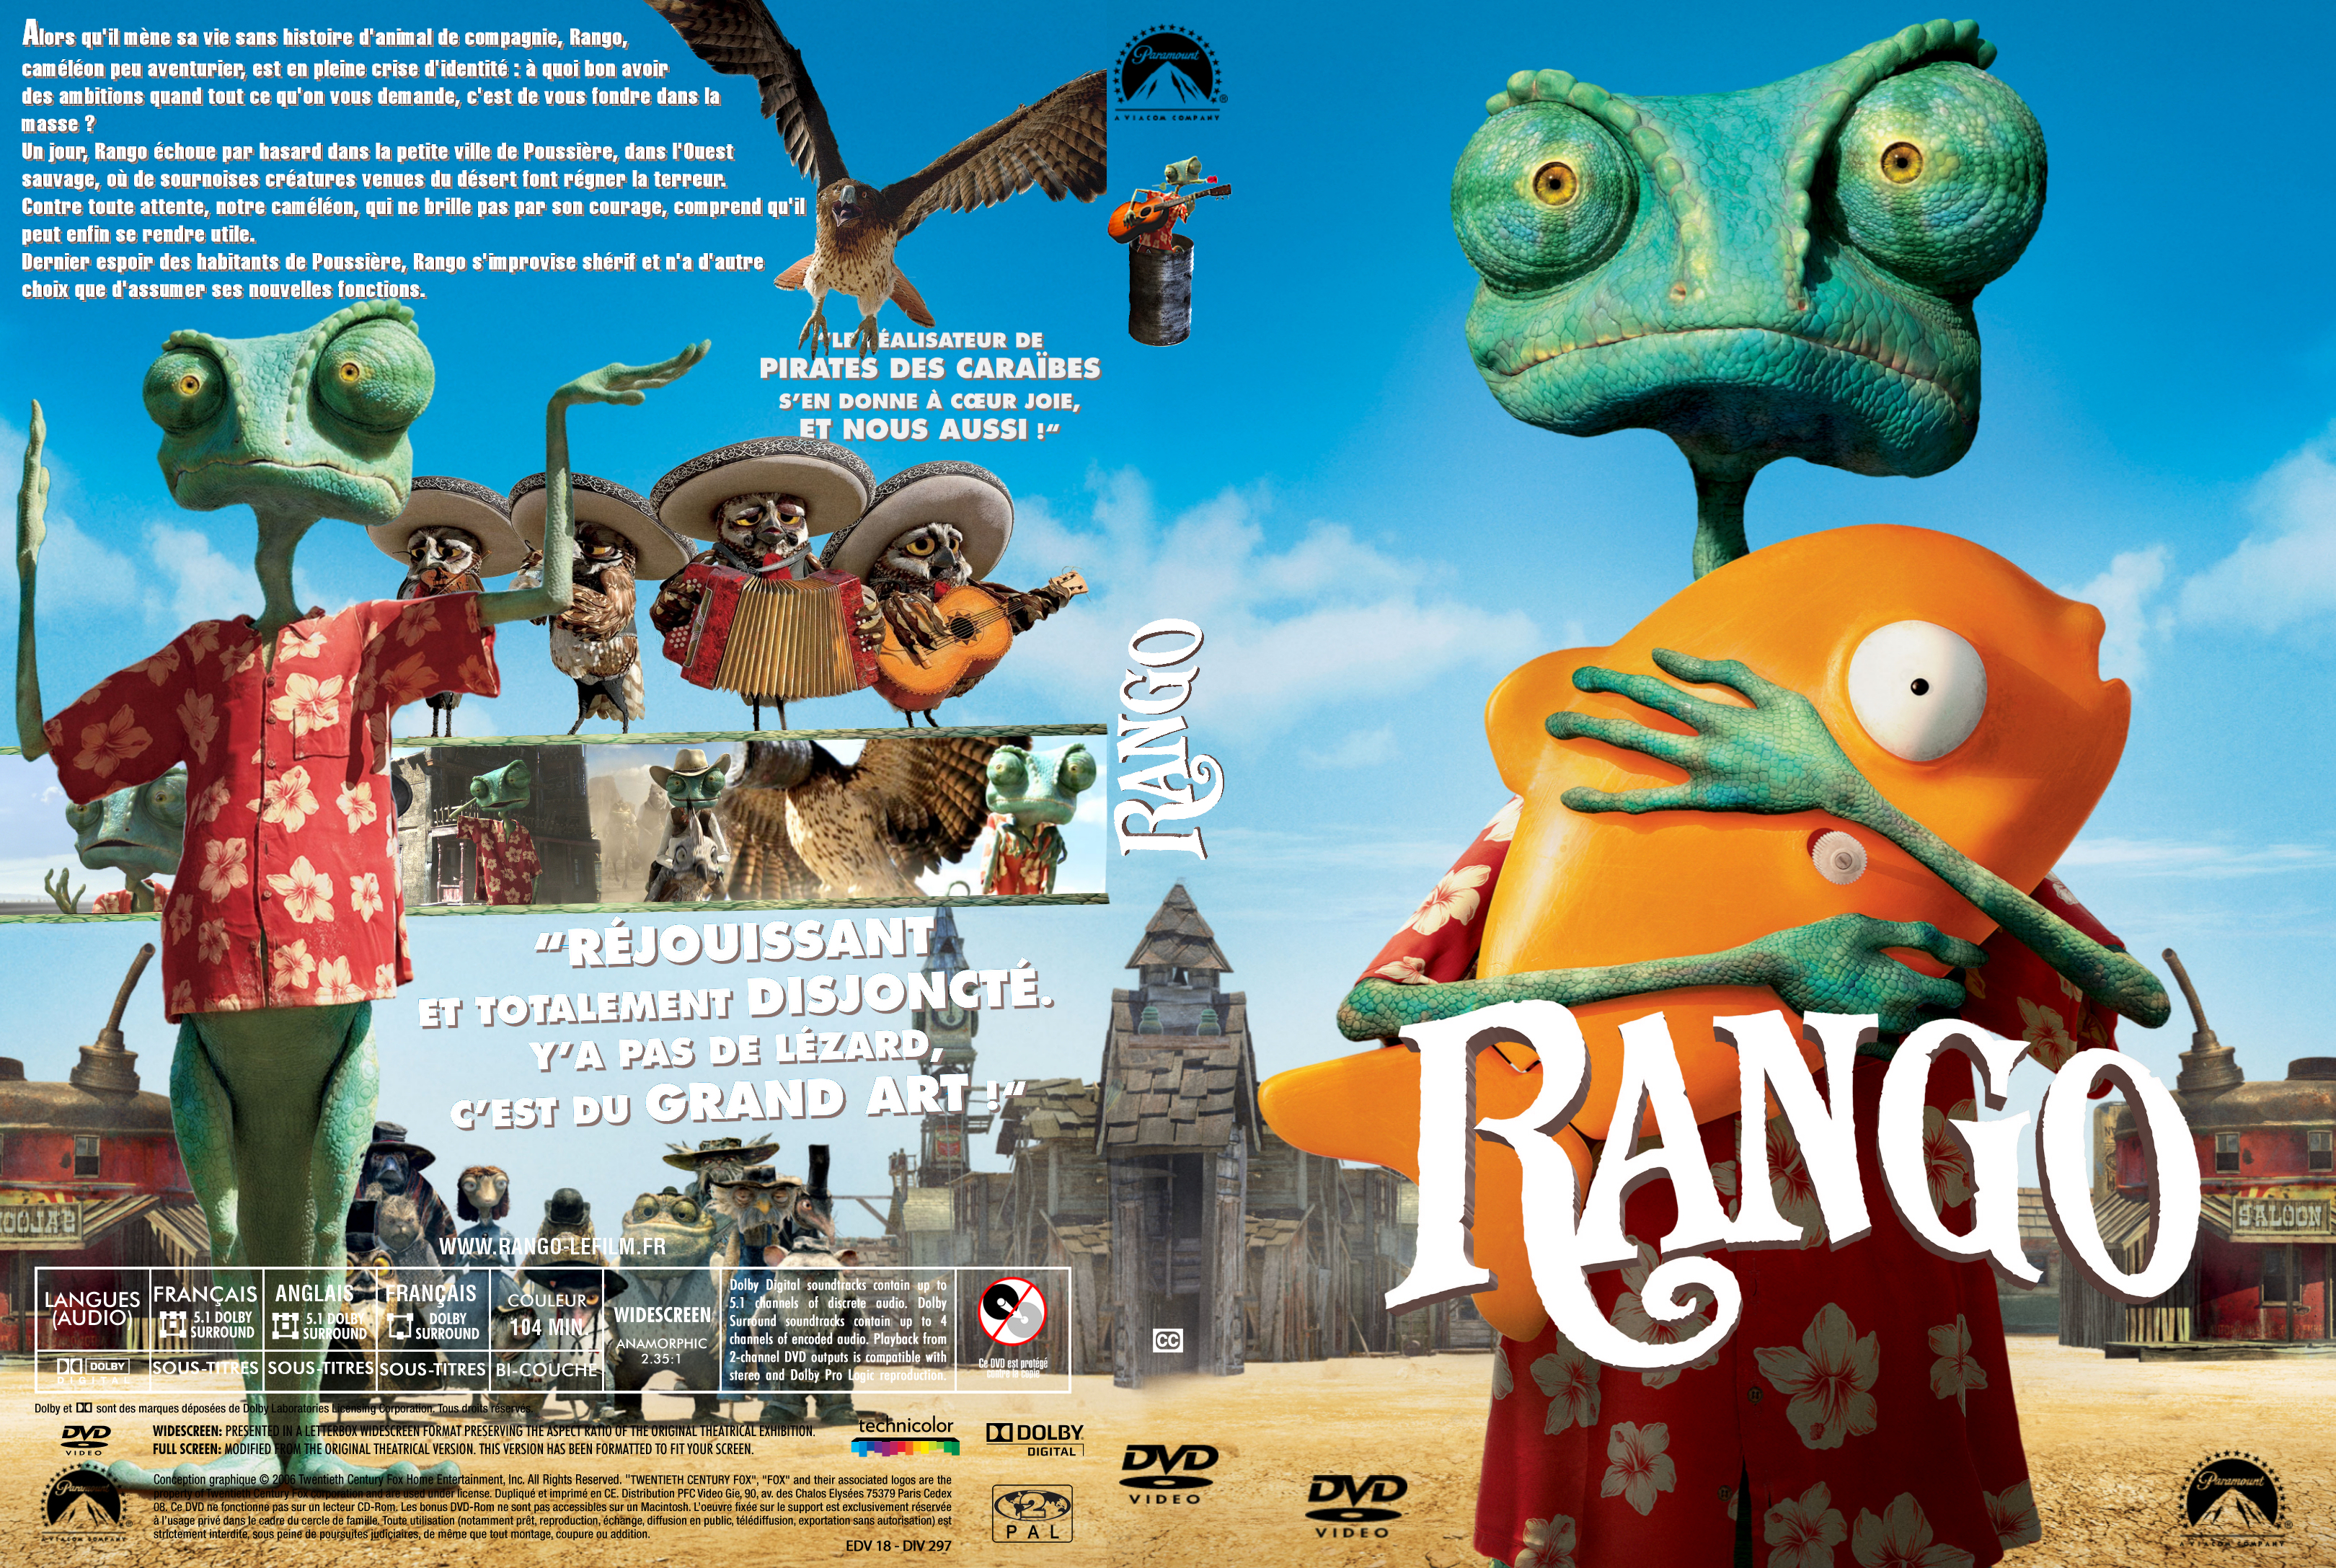 Jaquette DVD Rango custom